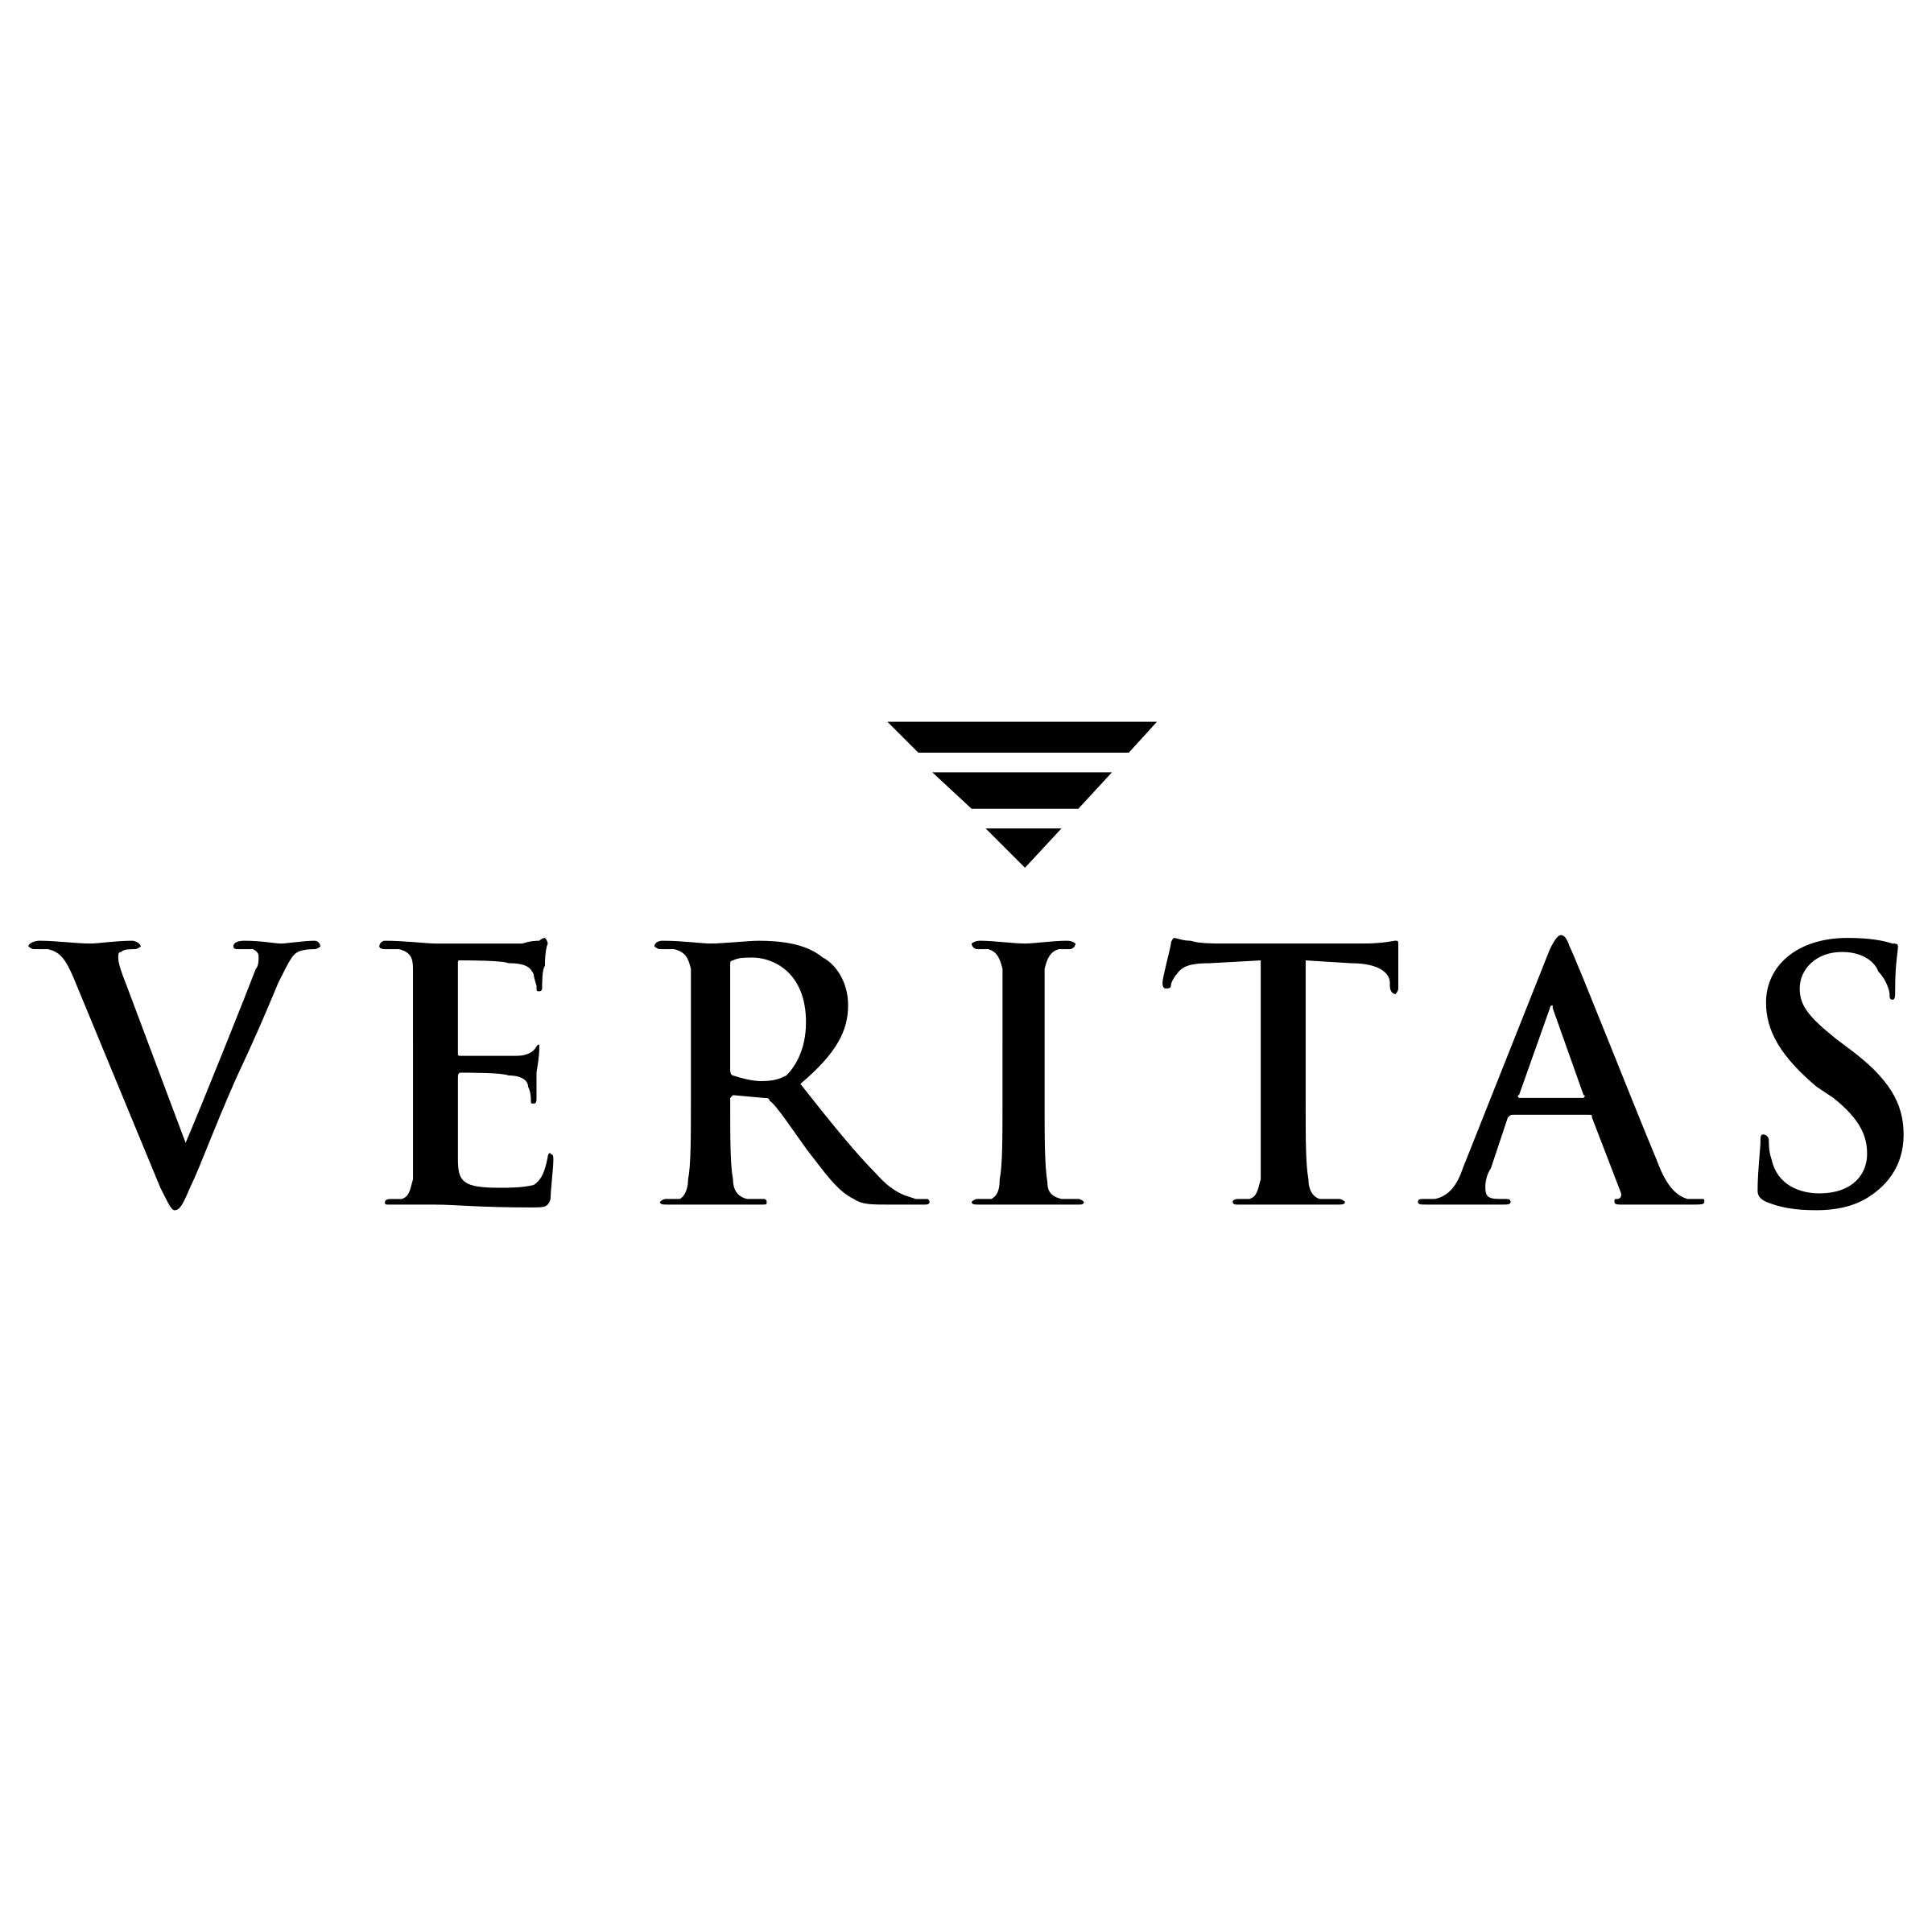 Veritas Logo - Veritas Logo PNG Transparent & SVG Vector - Freebie Supply